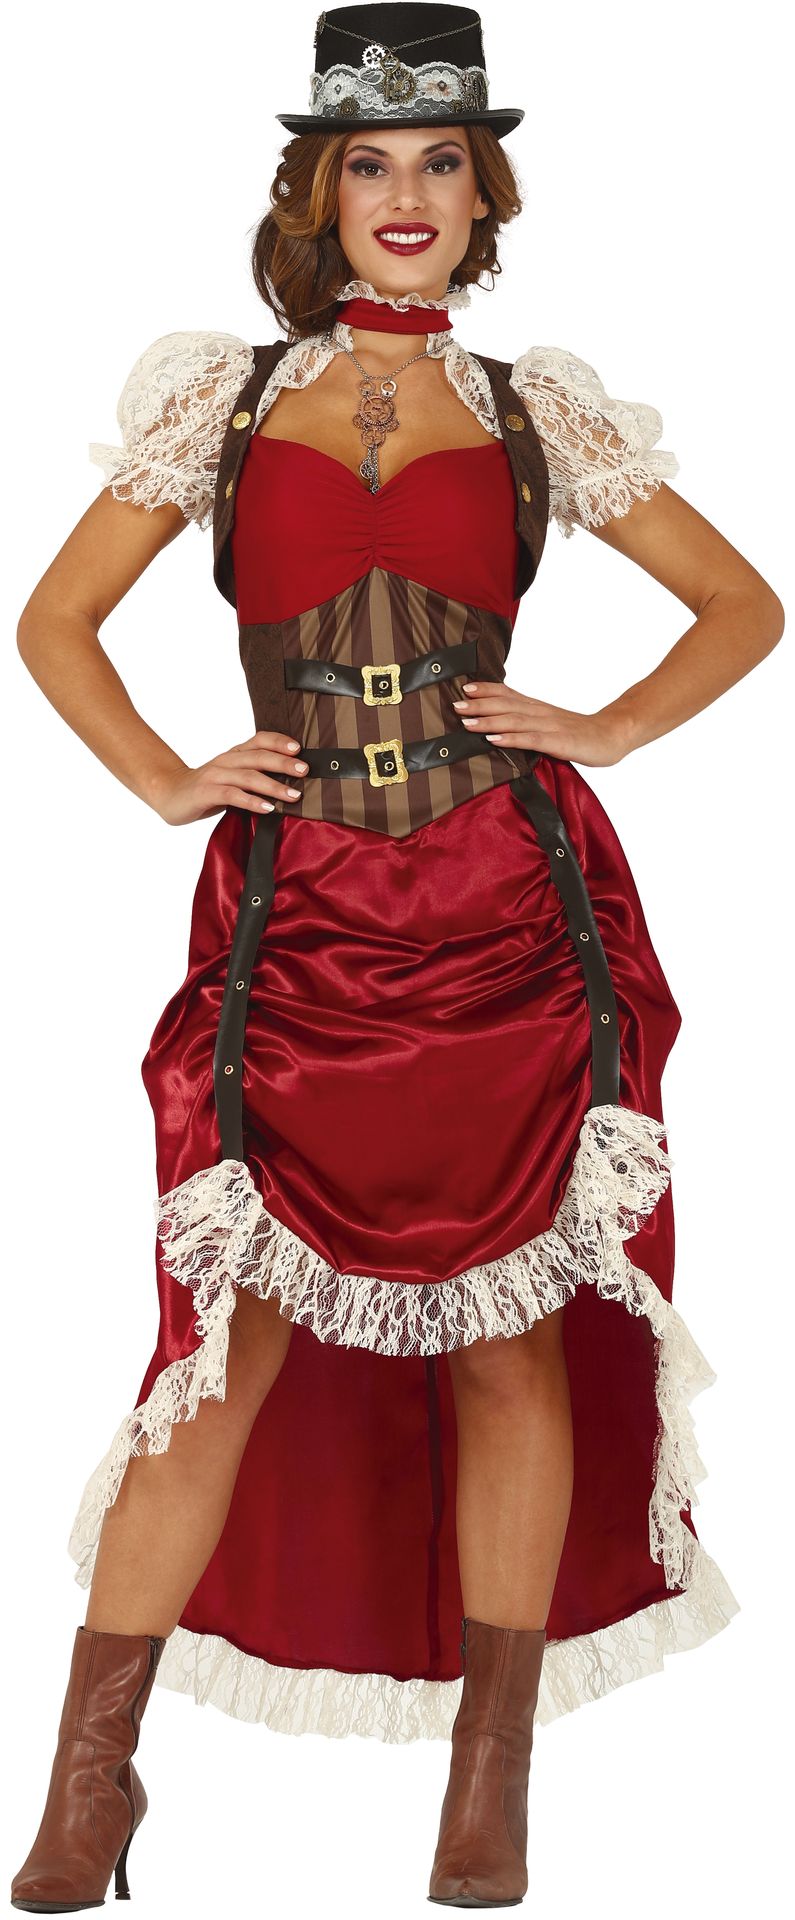 Steampunk rode jurk